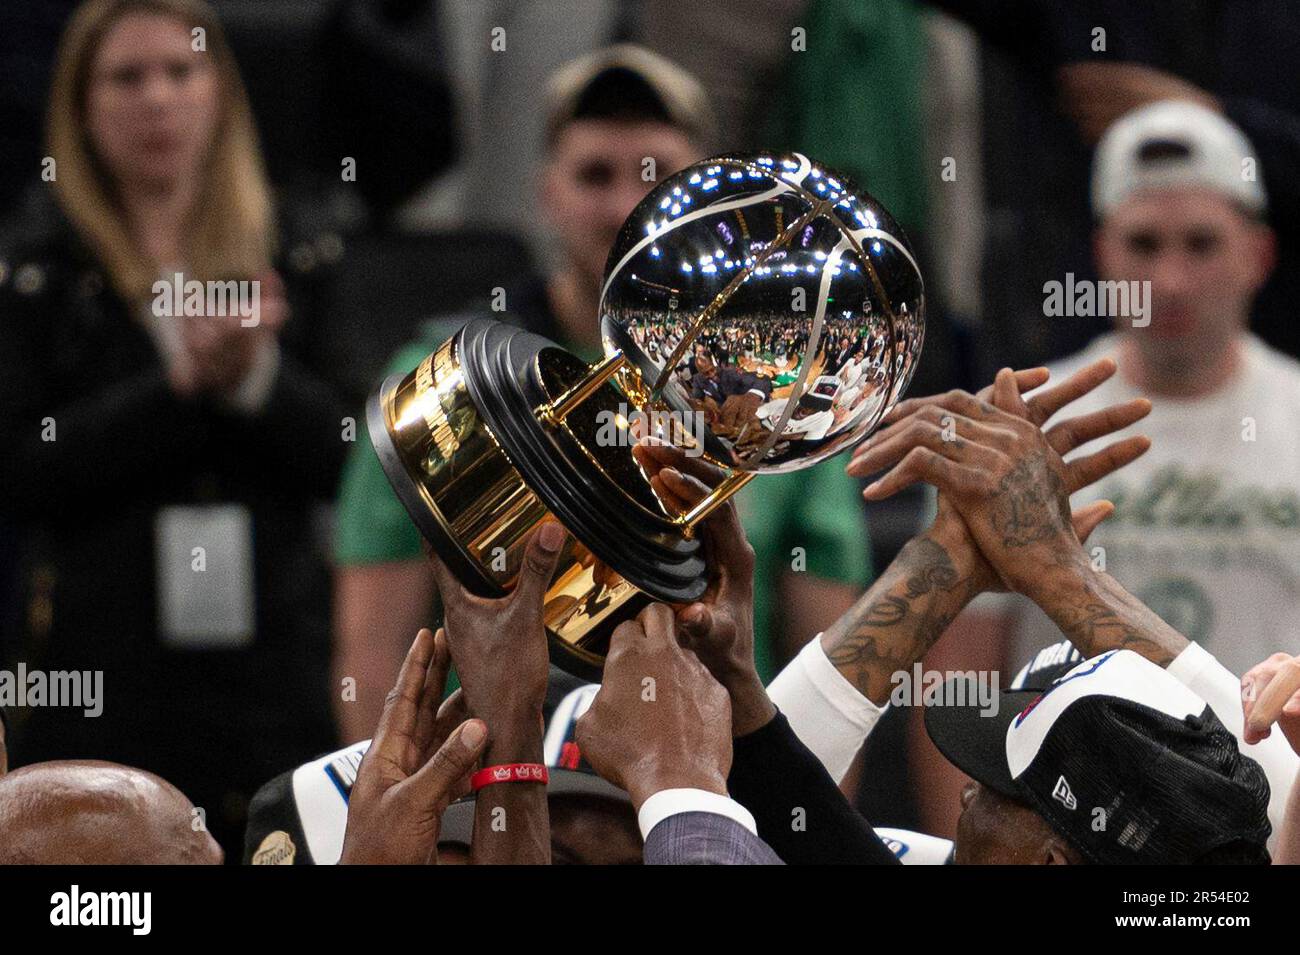 BOSTON, MA - MAY 29: Miami Heat players celebrate with the NBA